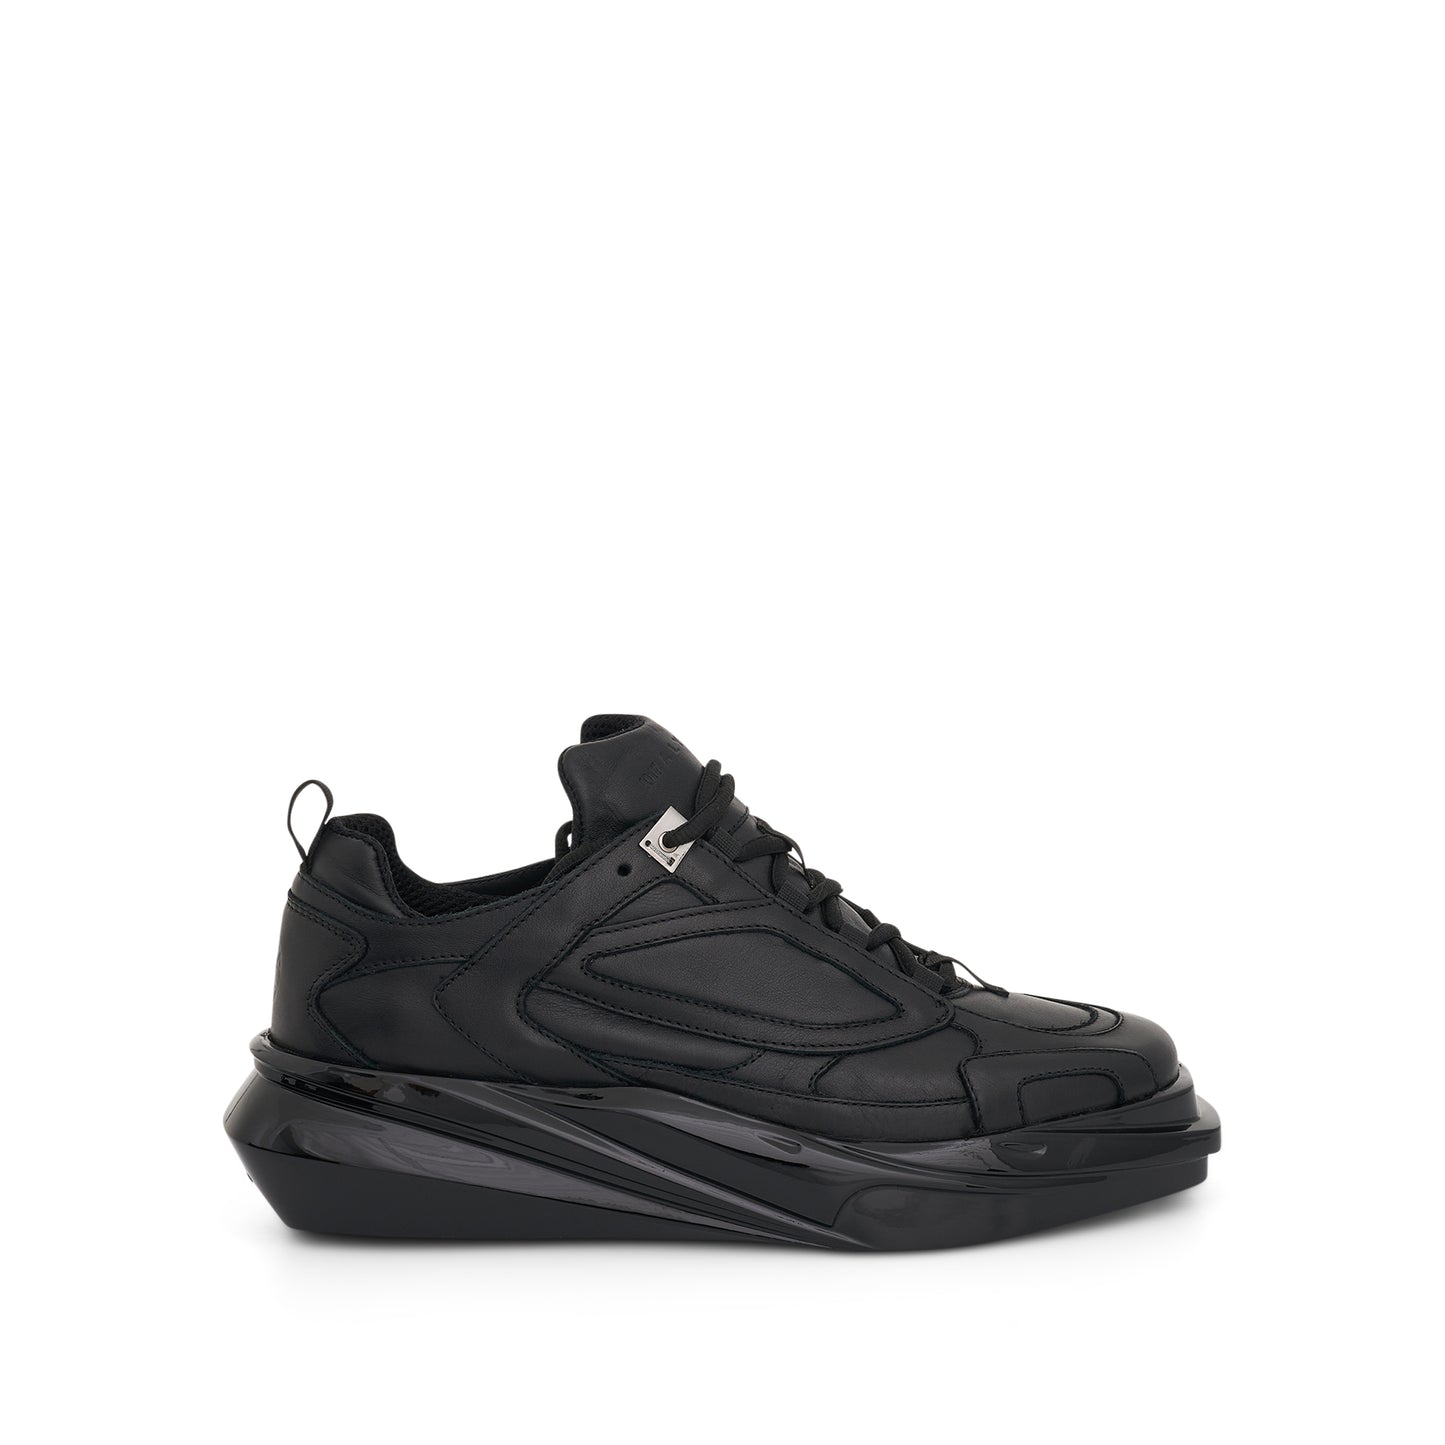 Mono Hiking Sneakers in Black